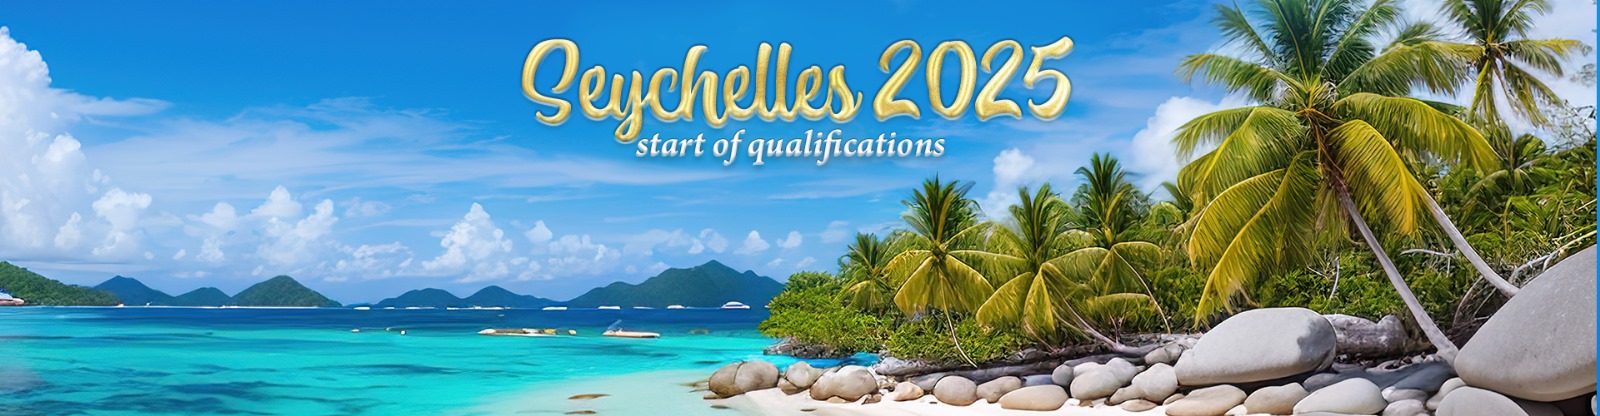 SEYCHELLES 2025!